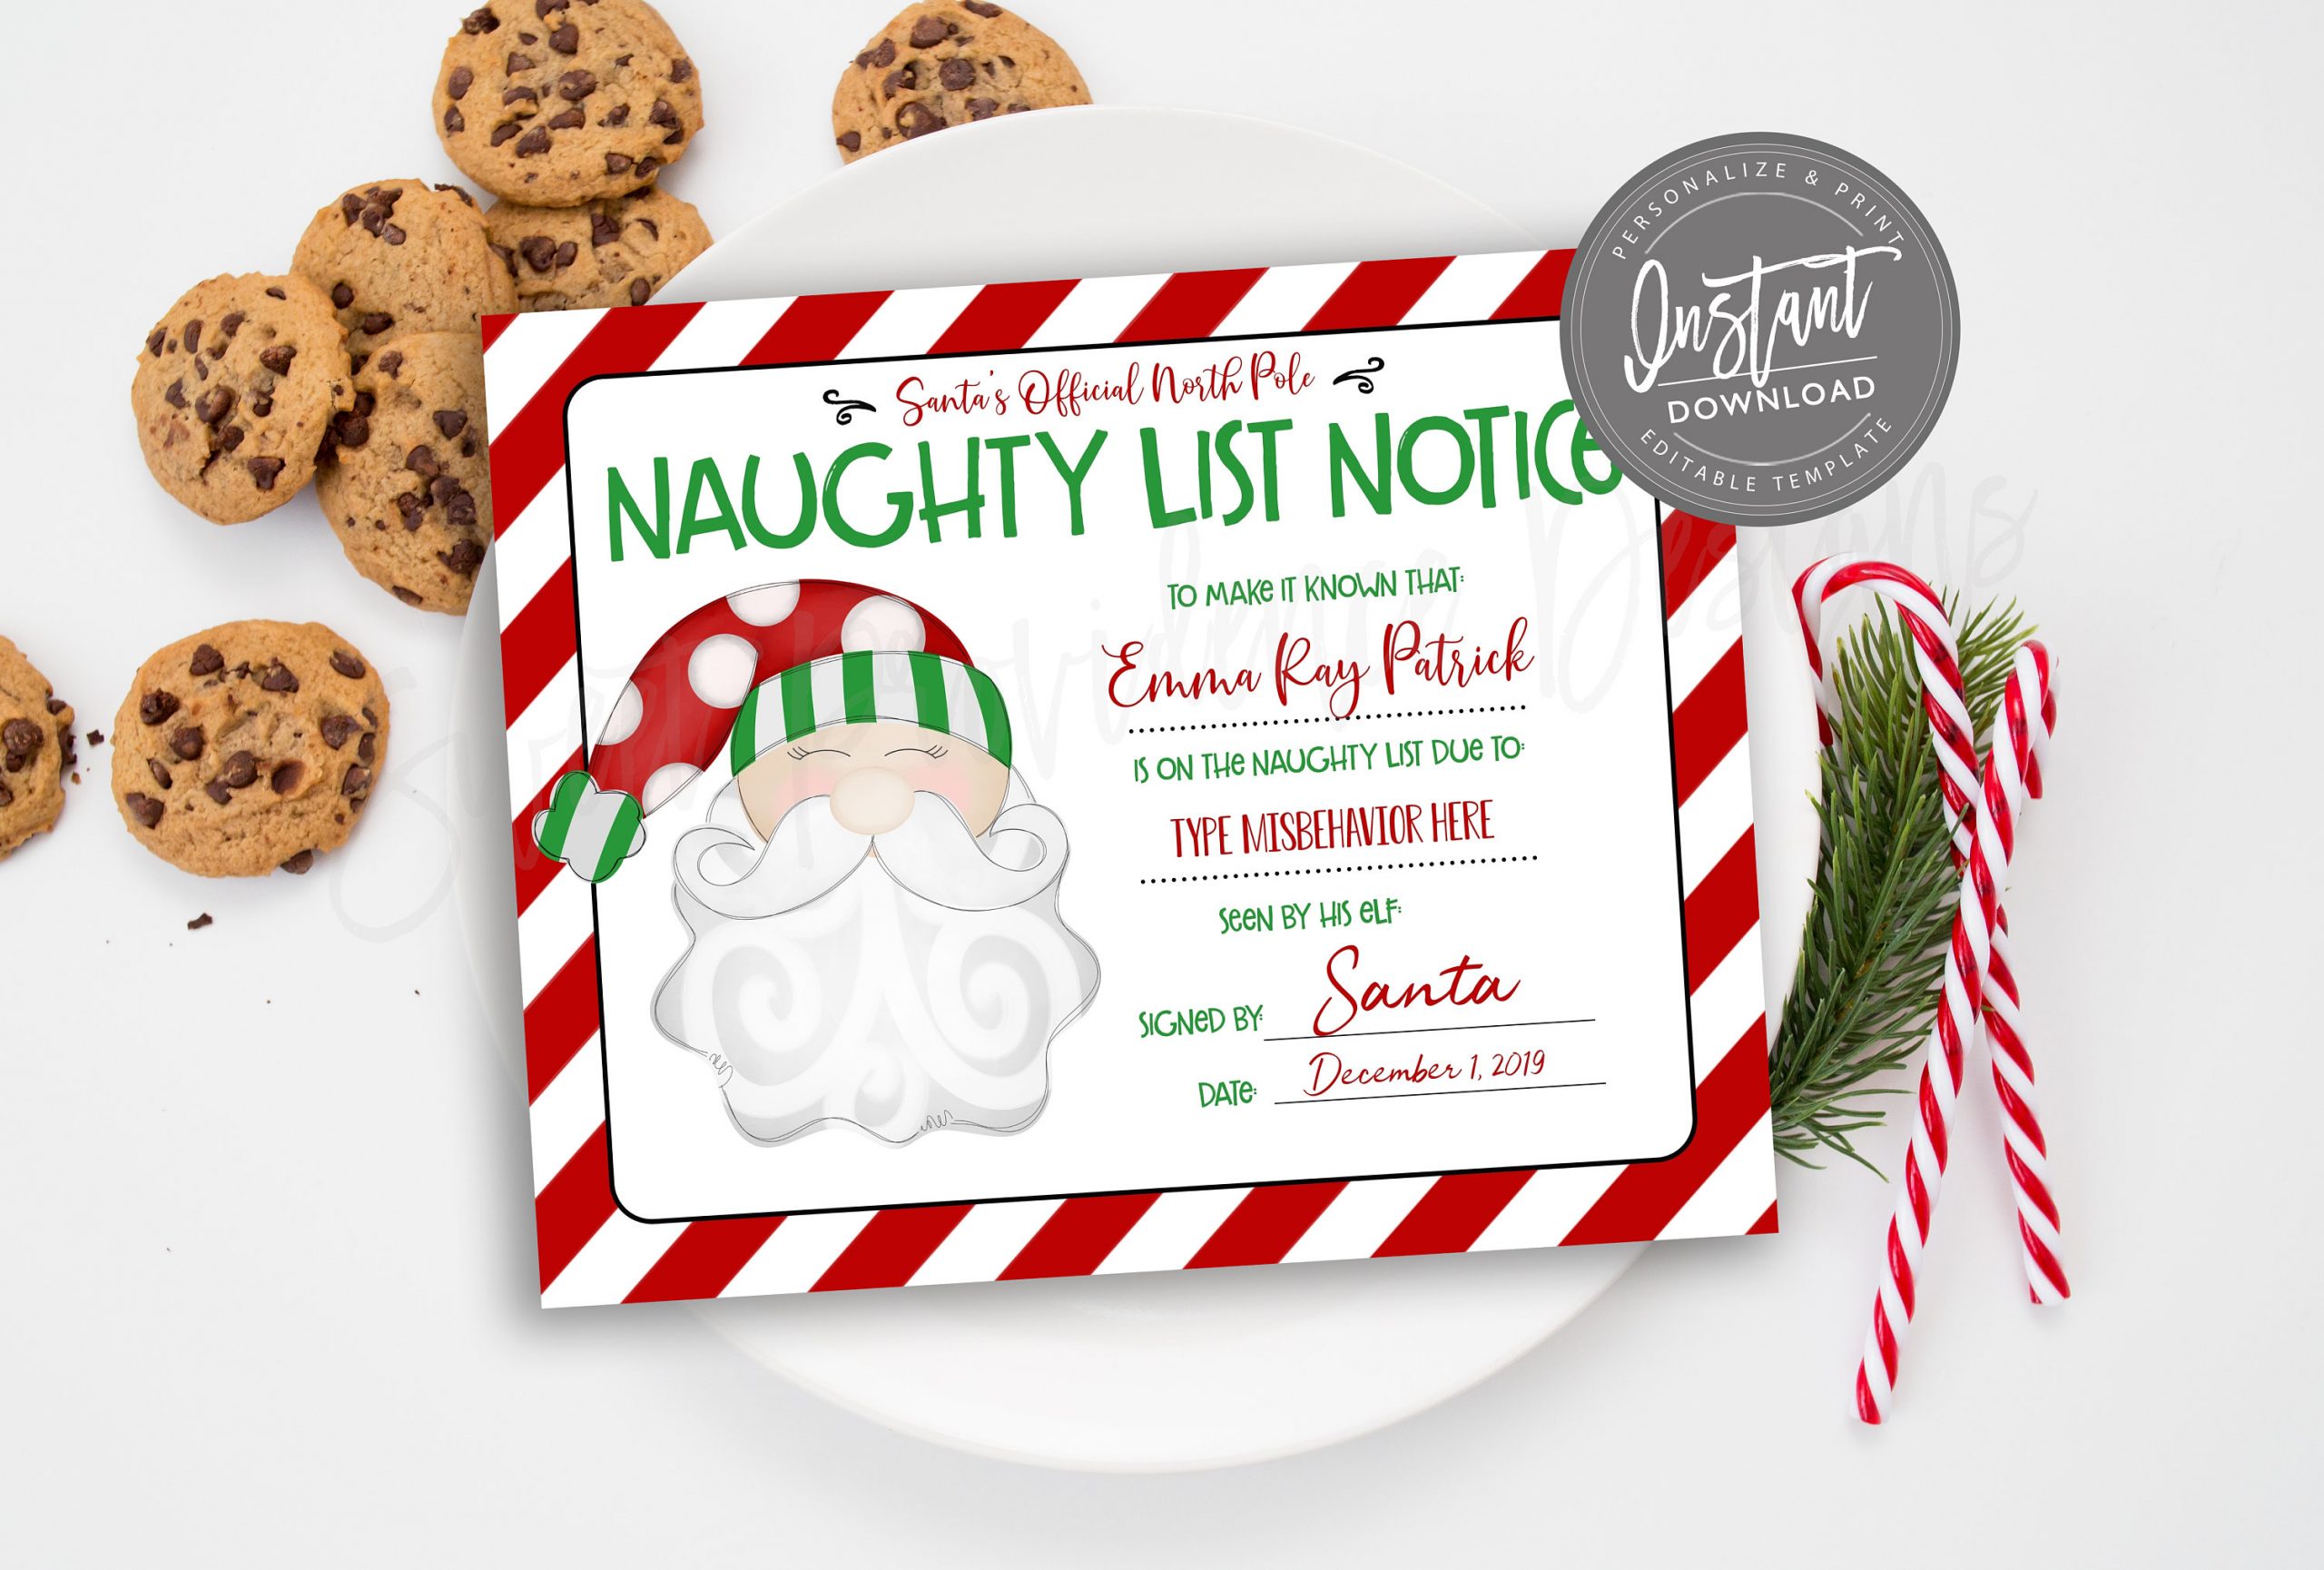 editable-naughty-list-notice-nice-list-certificate-note-from-elf